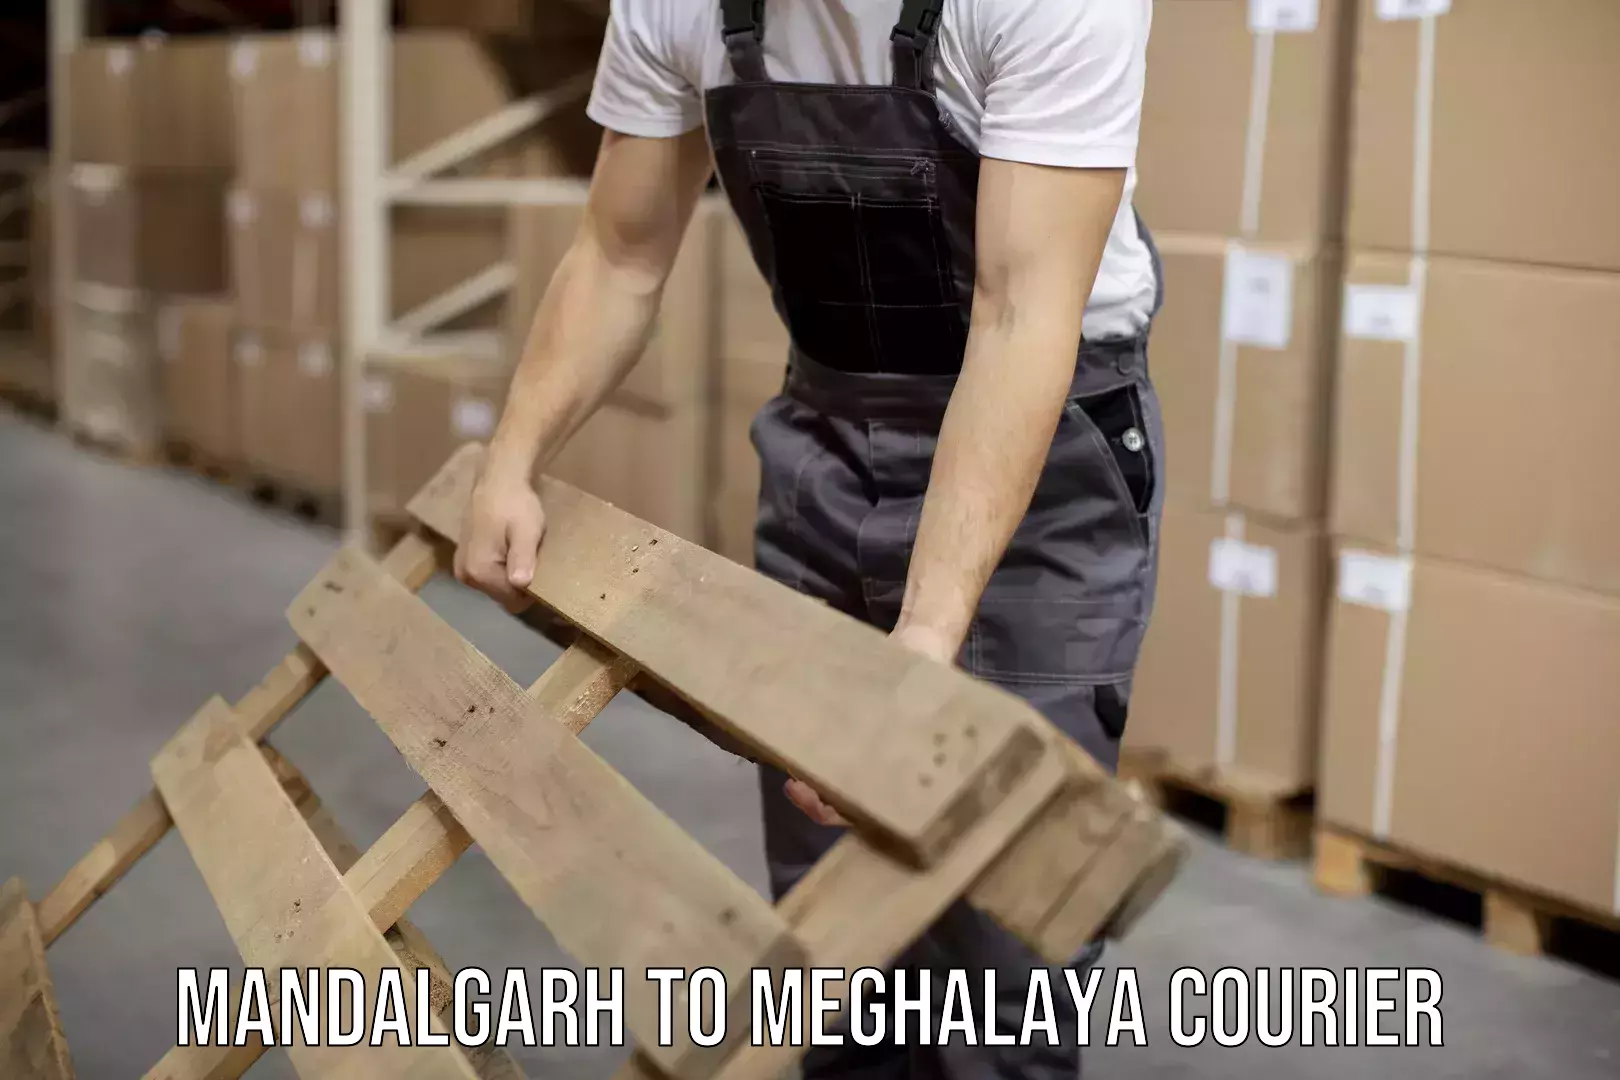 Professional courier handling Mandalgarh to Rongjeng